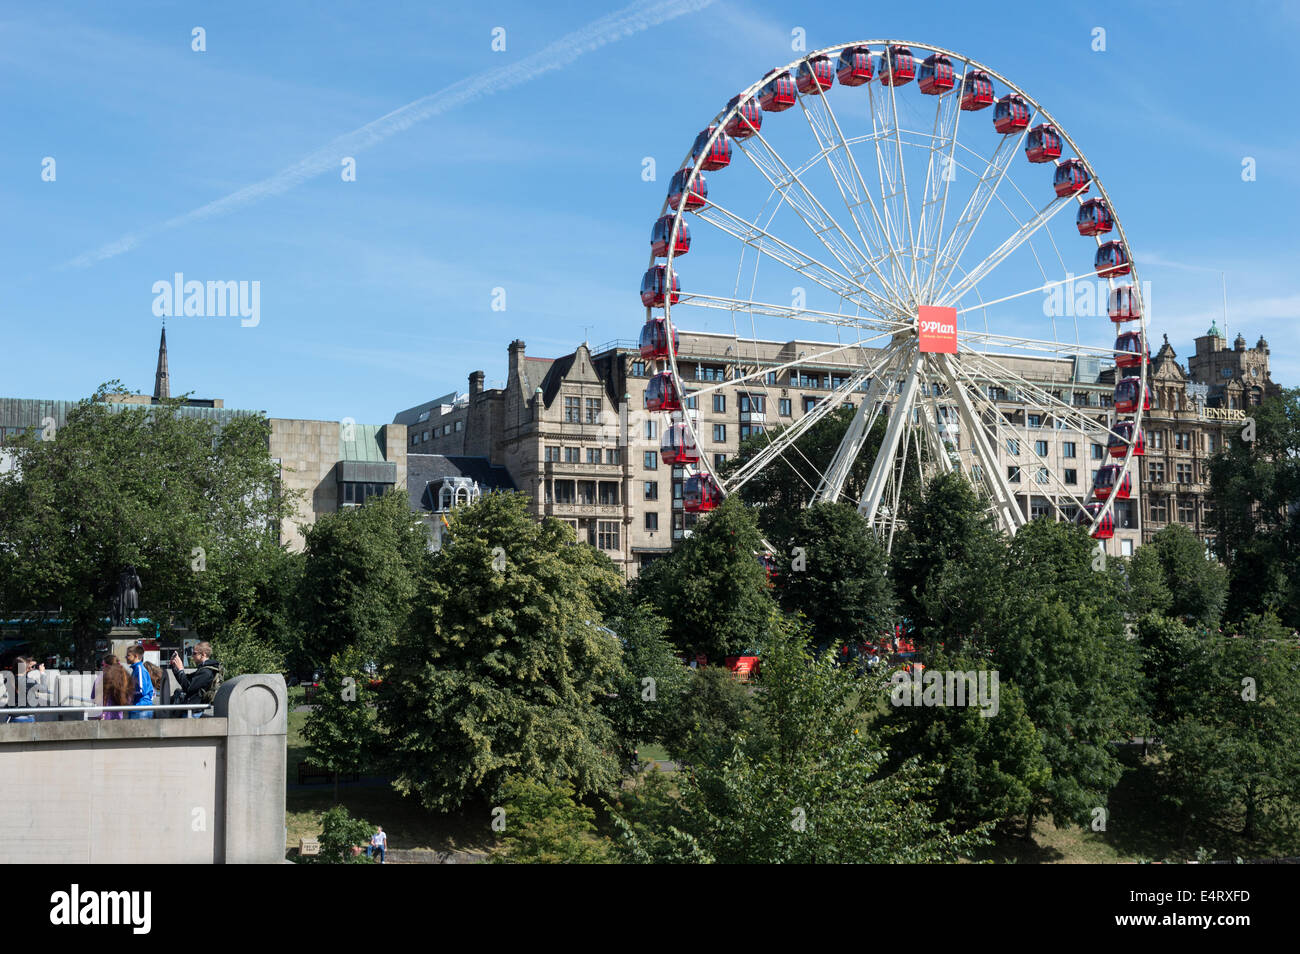 Festival ruota panoramica Ferris in Princes Street di Edimburgo, Scozia Foto Stock